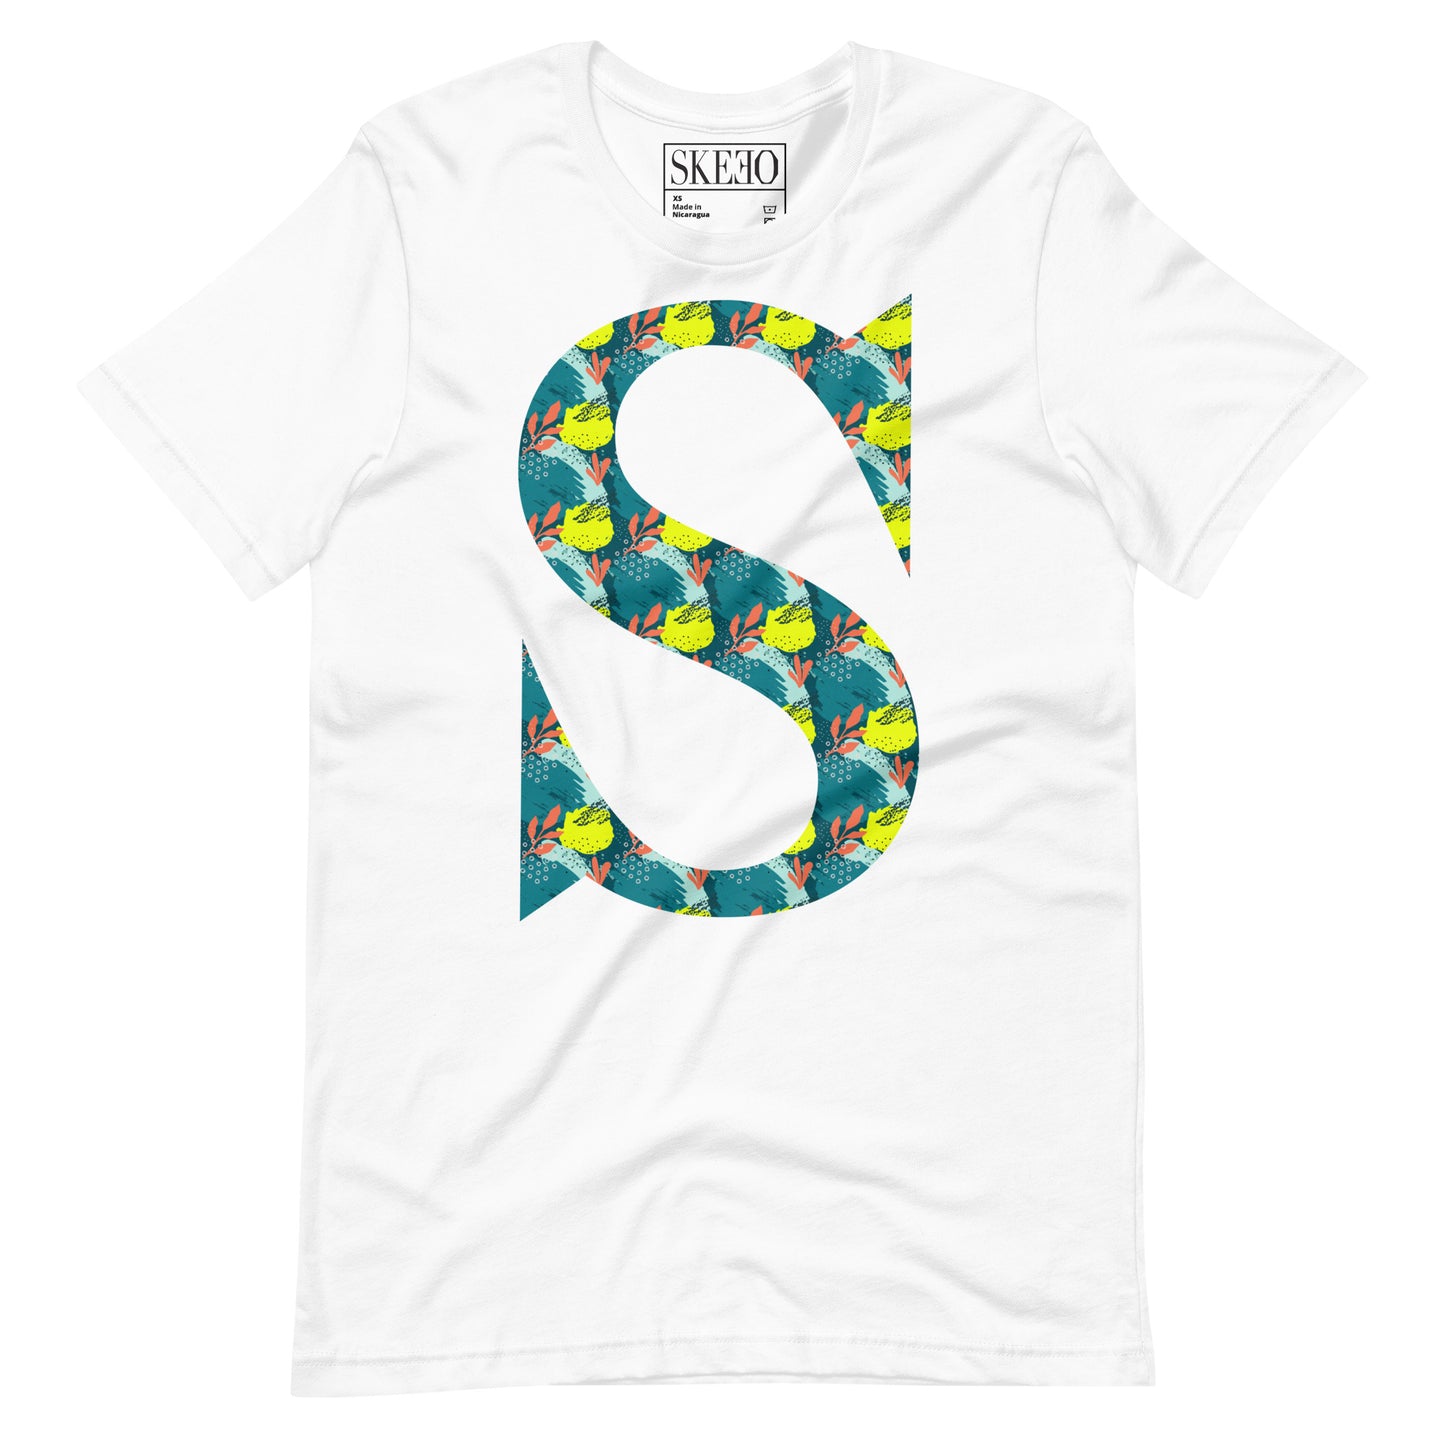 A SK S t-shirt